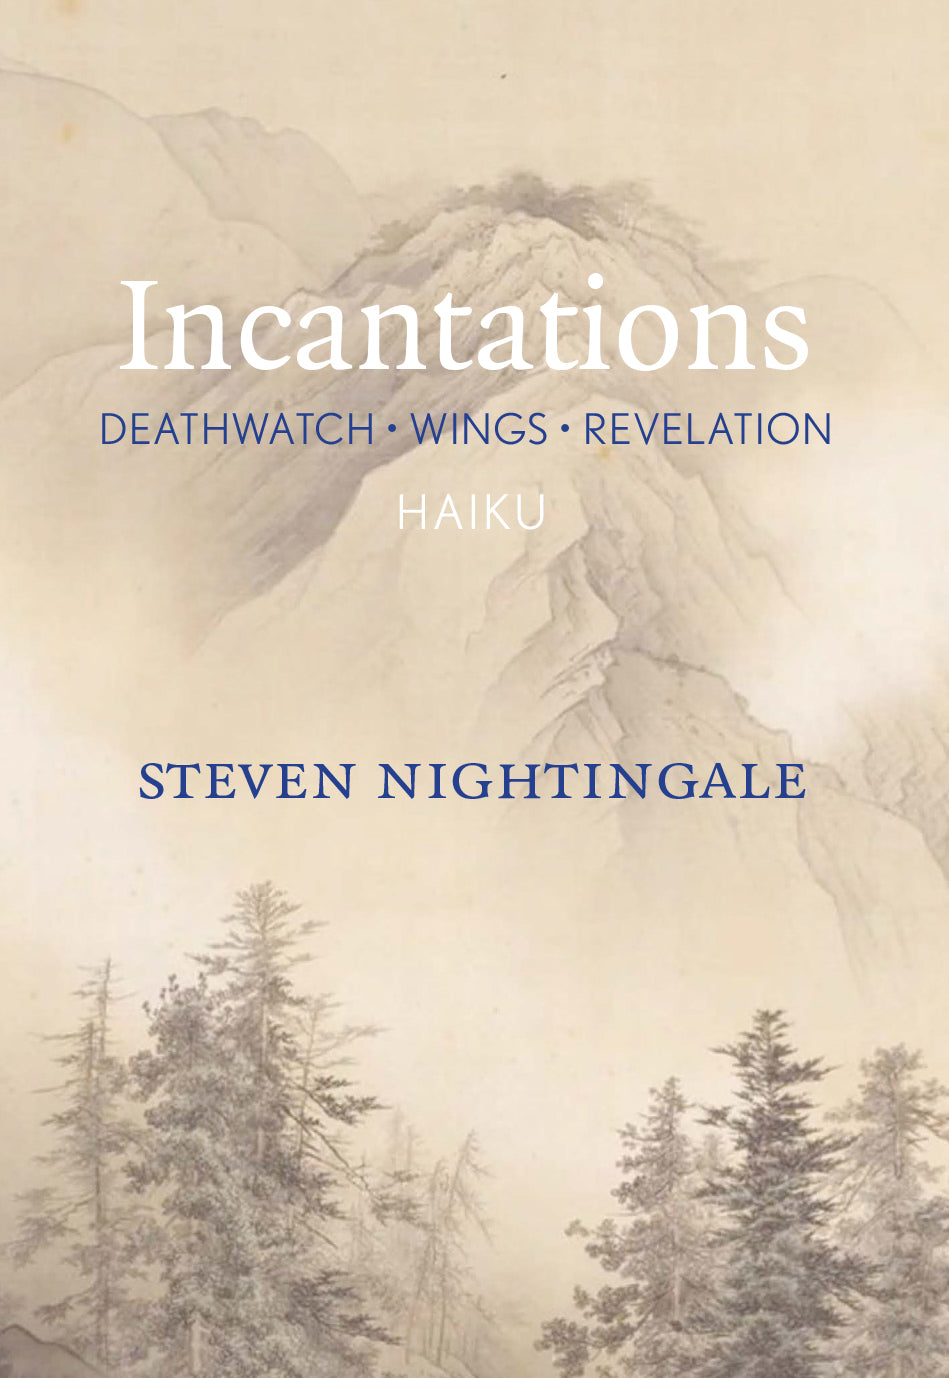 Incantations: Deathwatch - Wings - Revelations